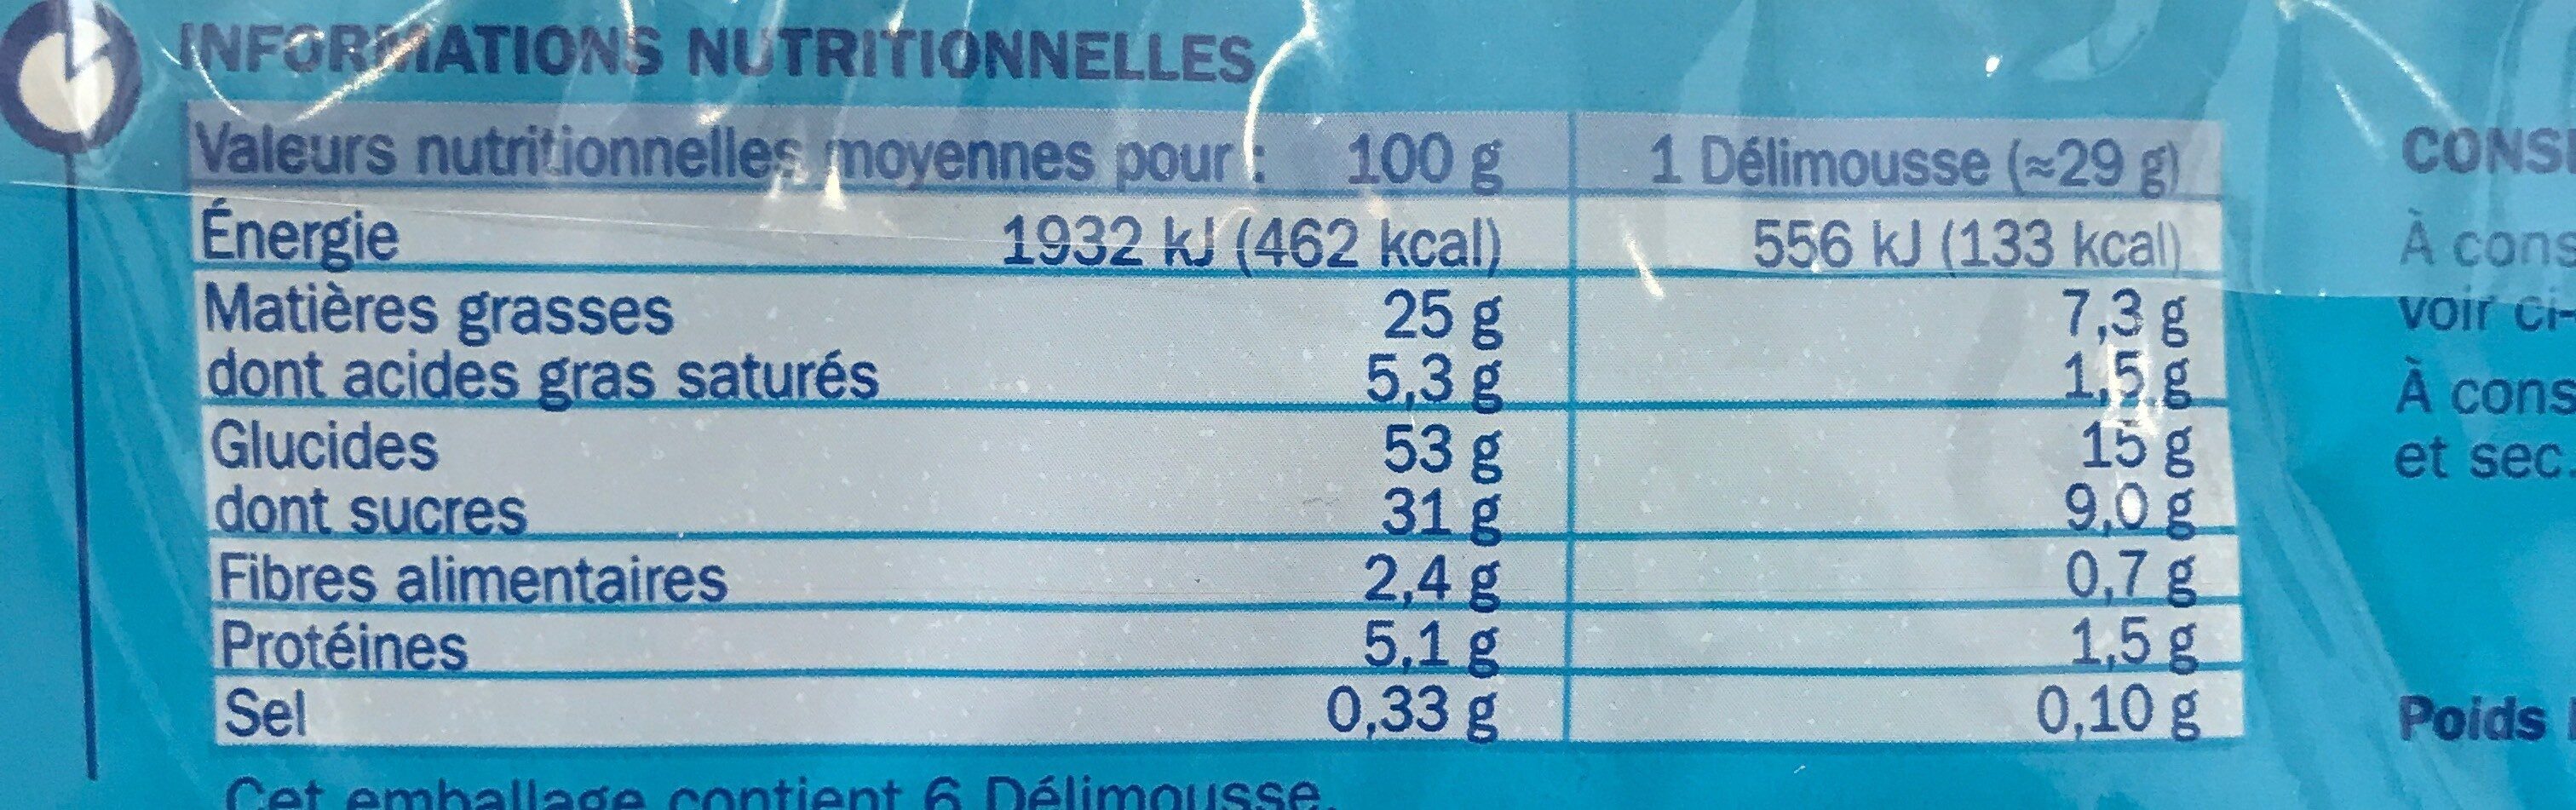 Goûters moelleux- delimousse- x 6 biscuits - Tableau nutritionnel